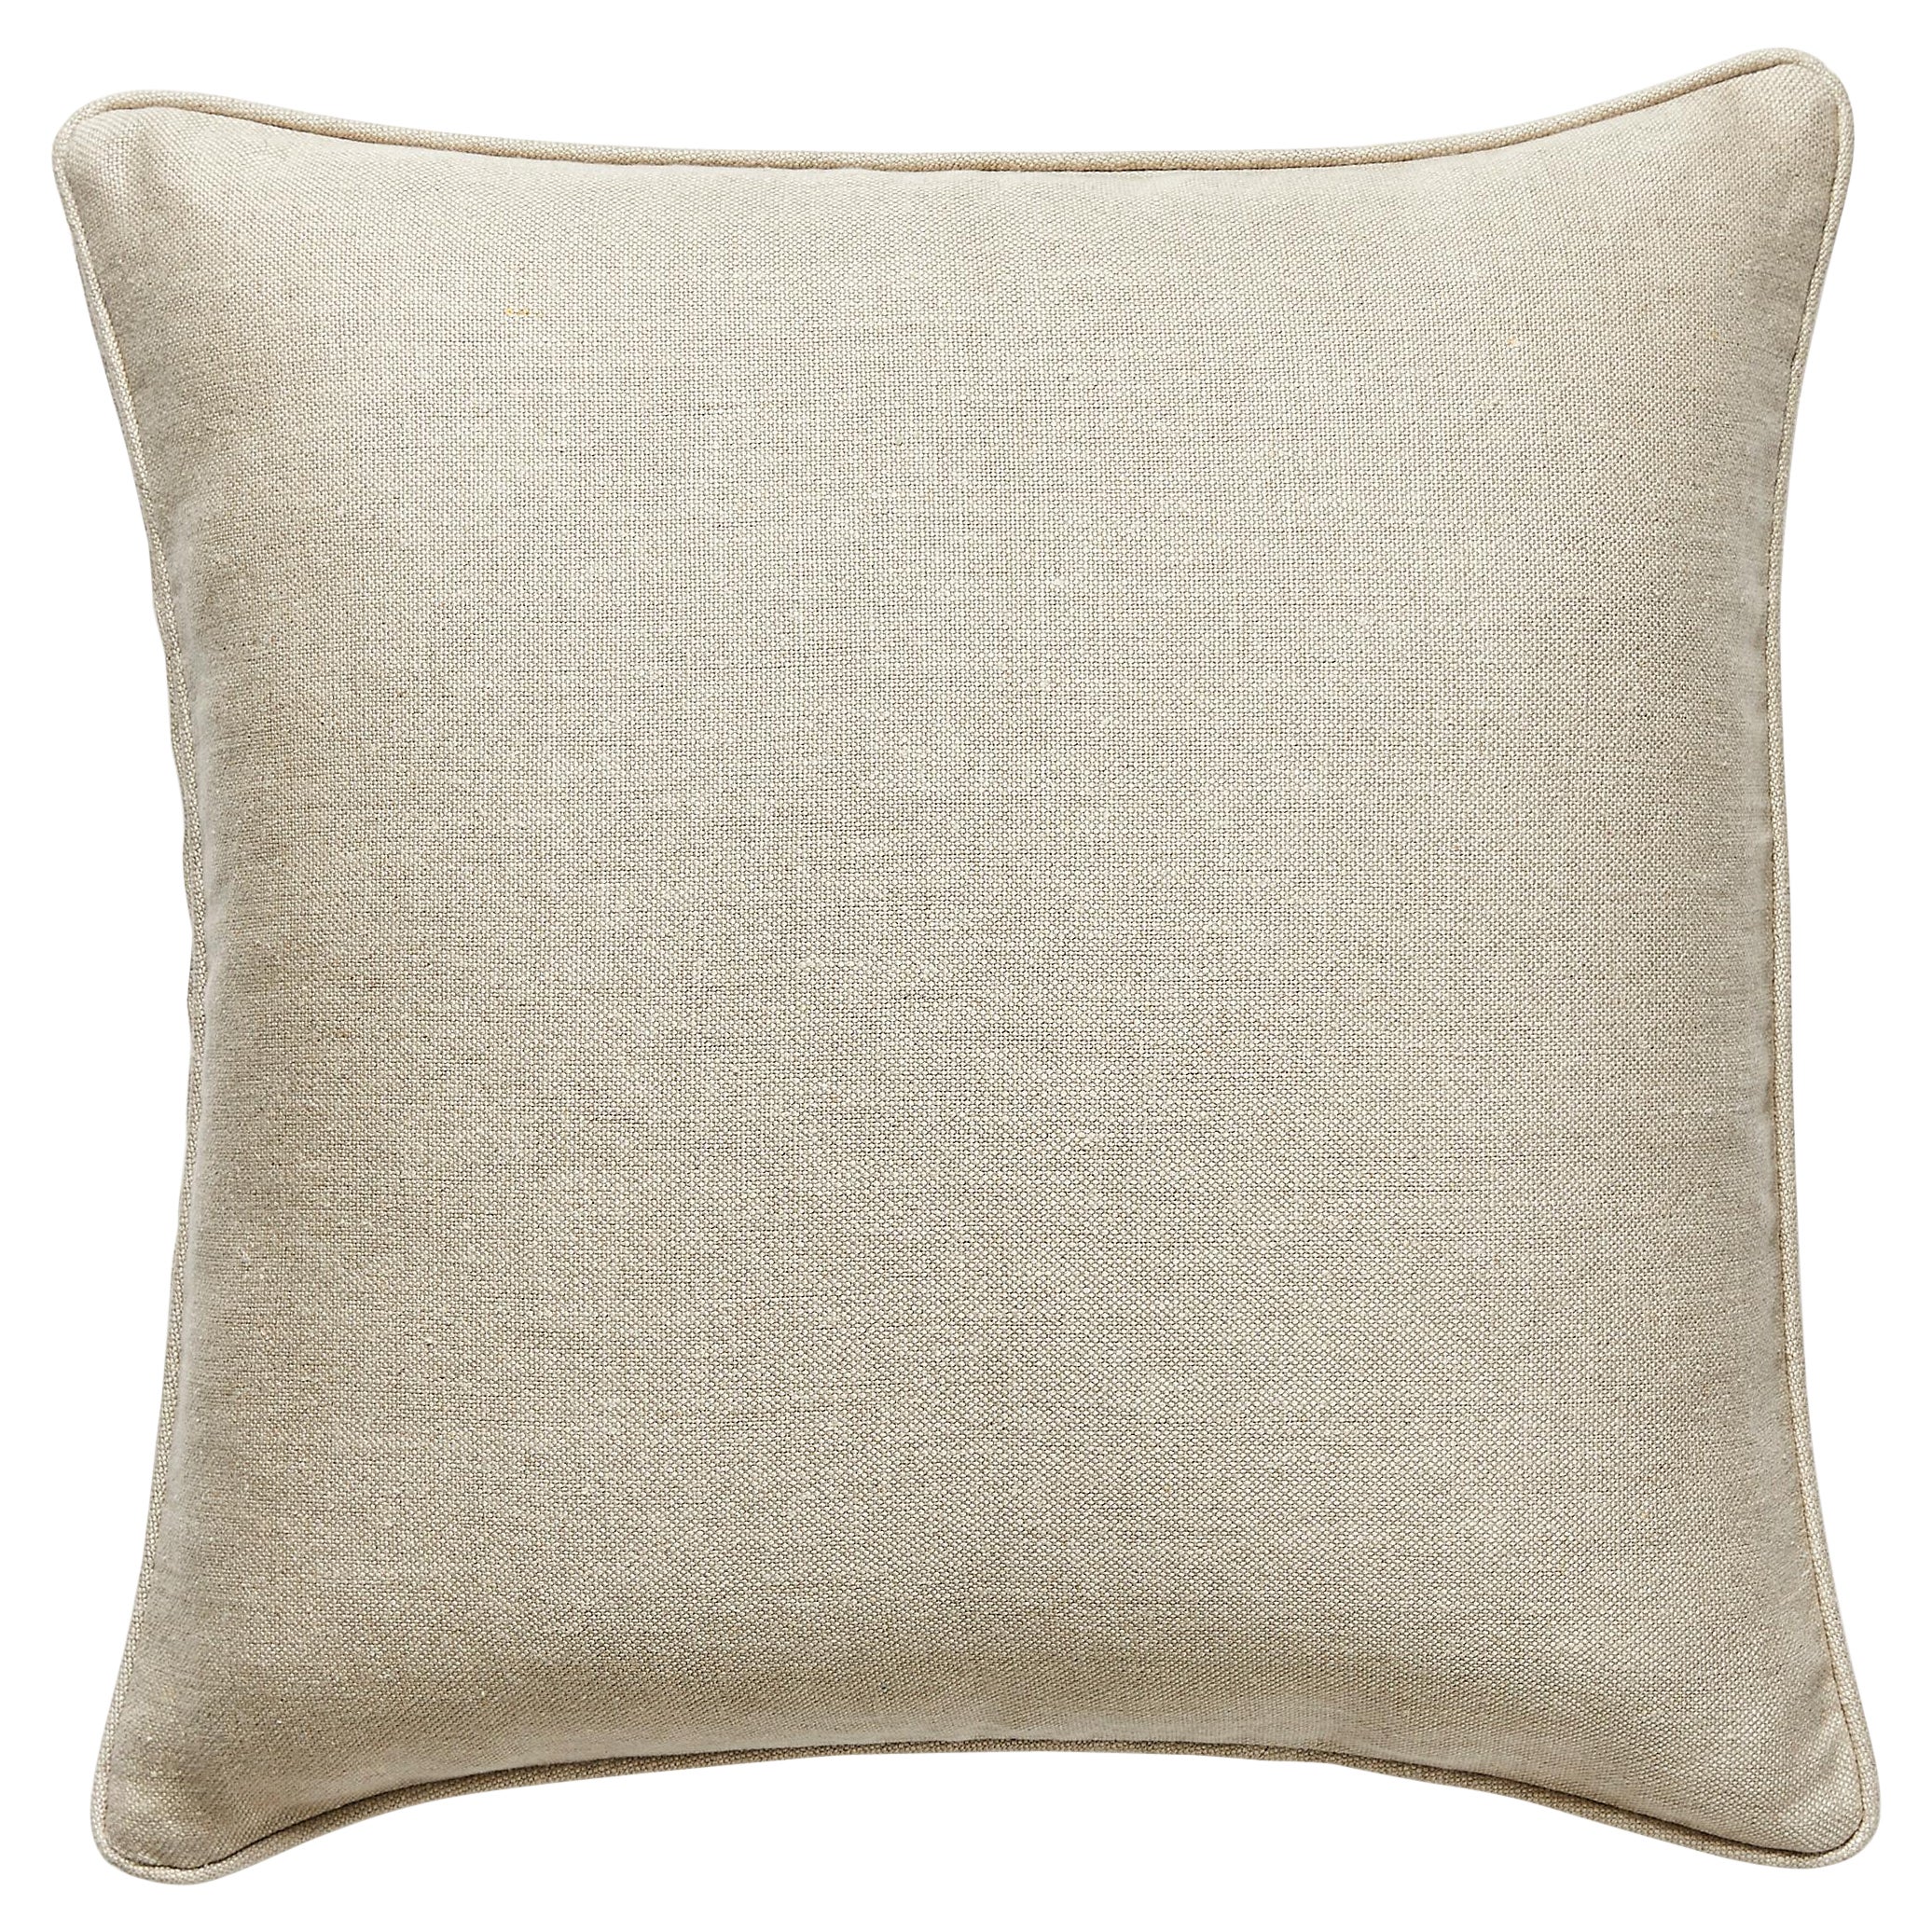 Toscana Linen Pillow For Sale